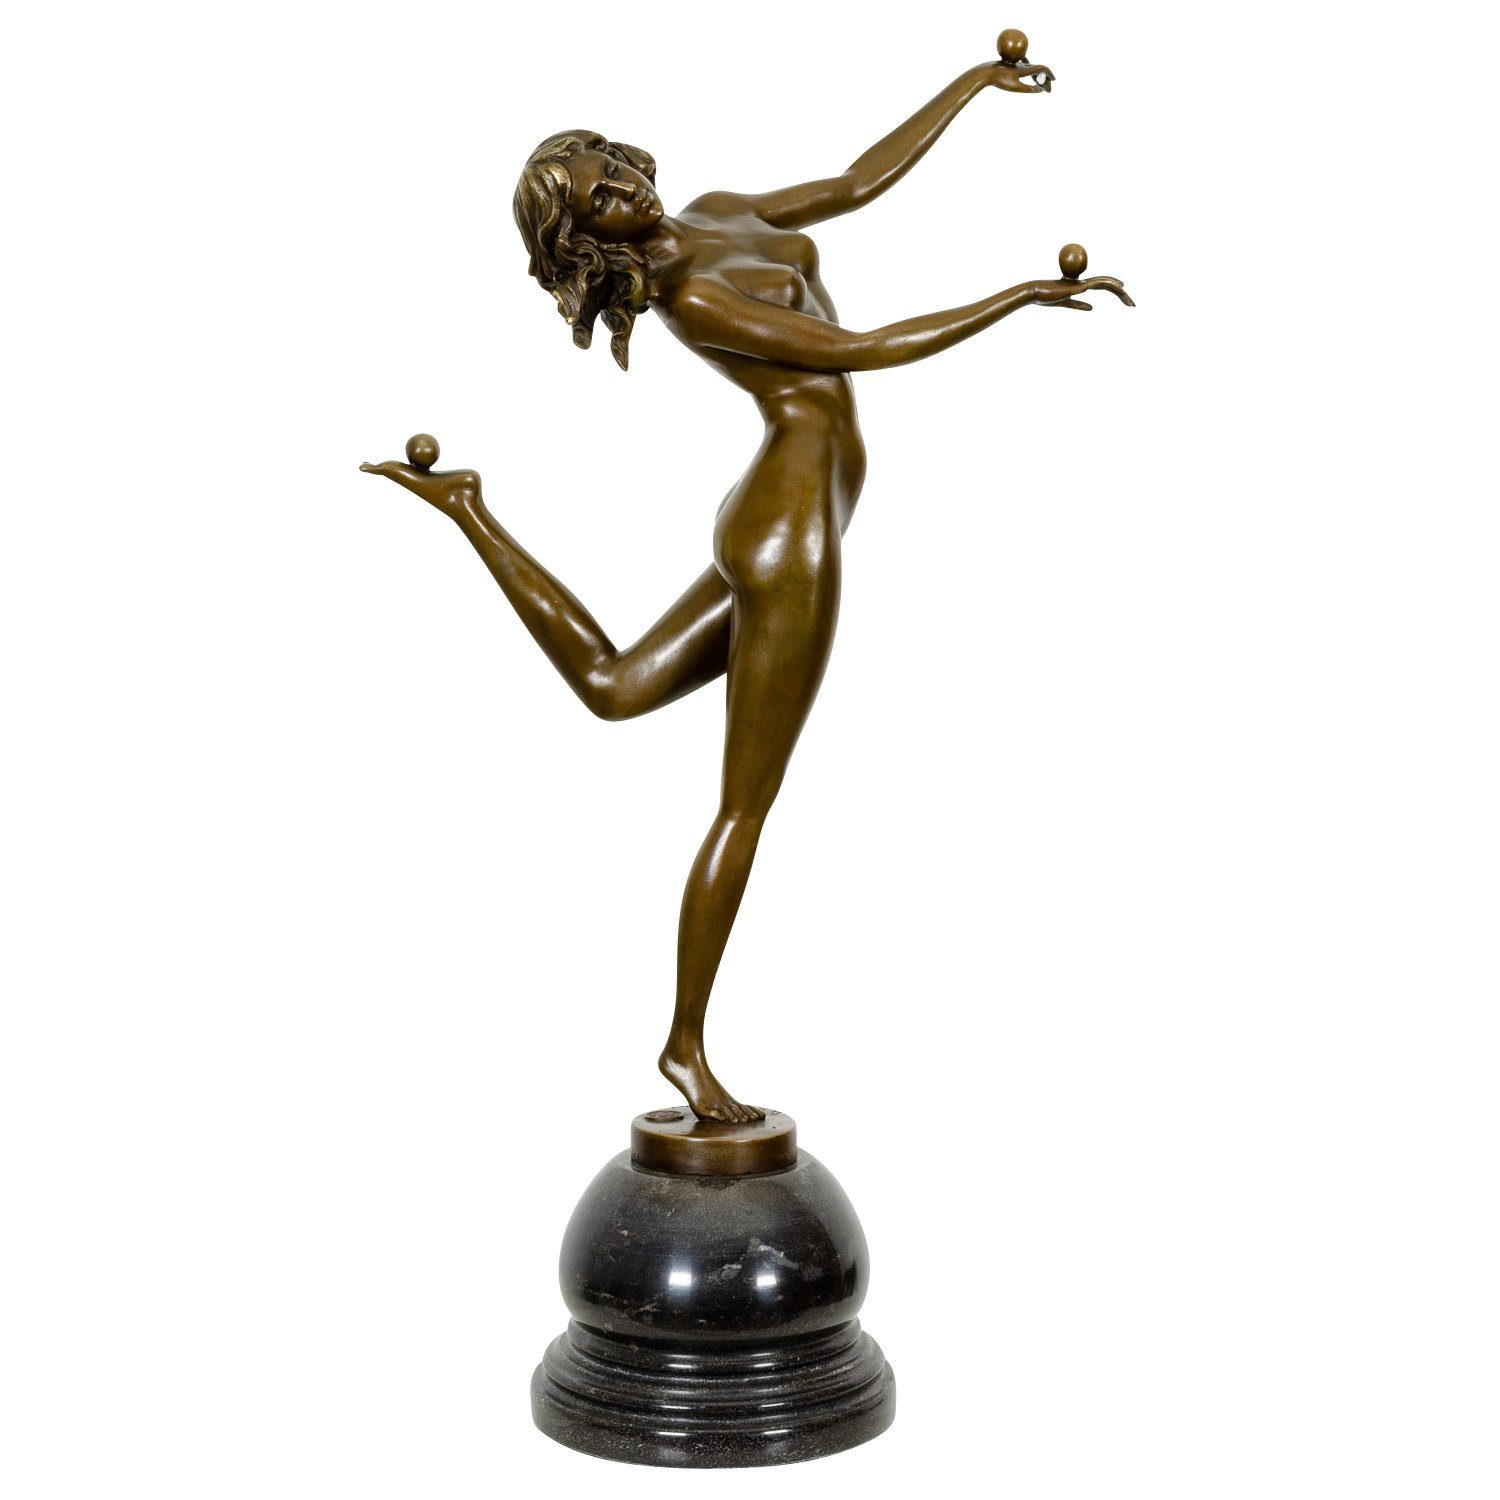 Aubaho Skulptur Bronzeskulptur Frau Akrobatin im Antik-Stil Bronze Figur Statue 54cm